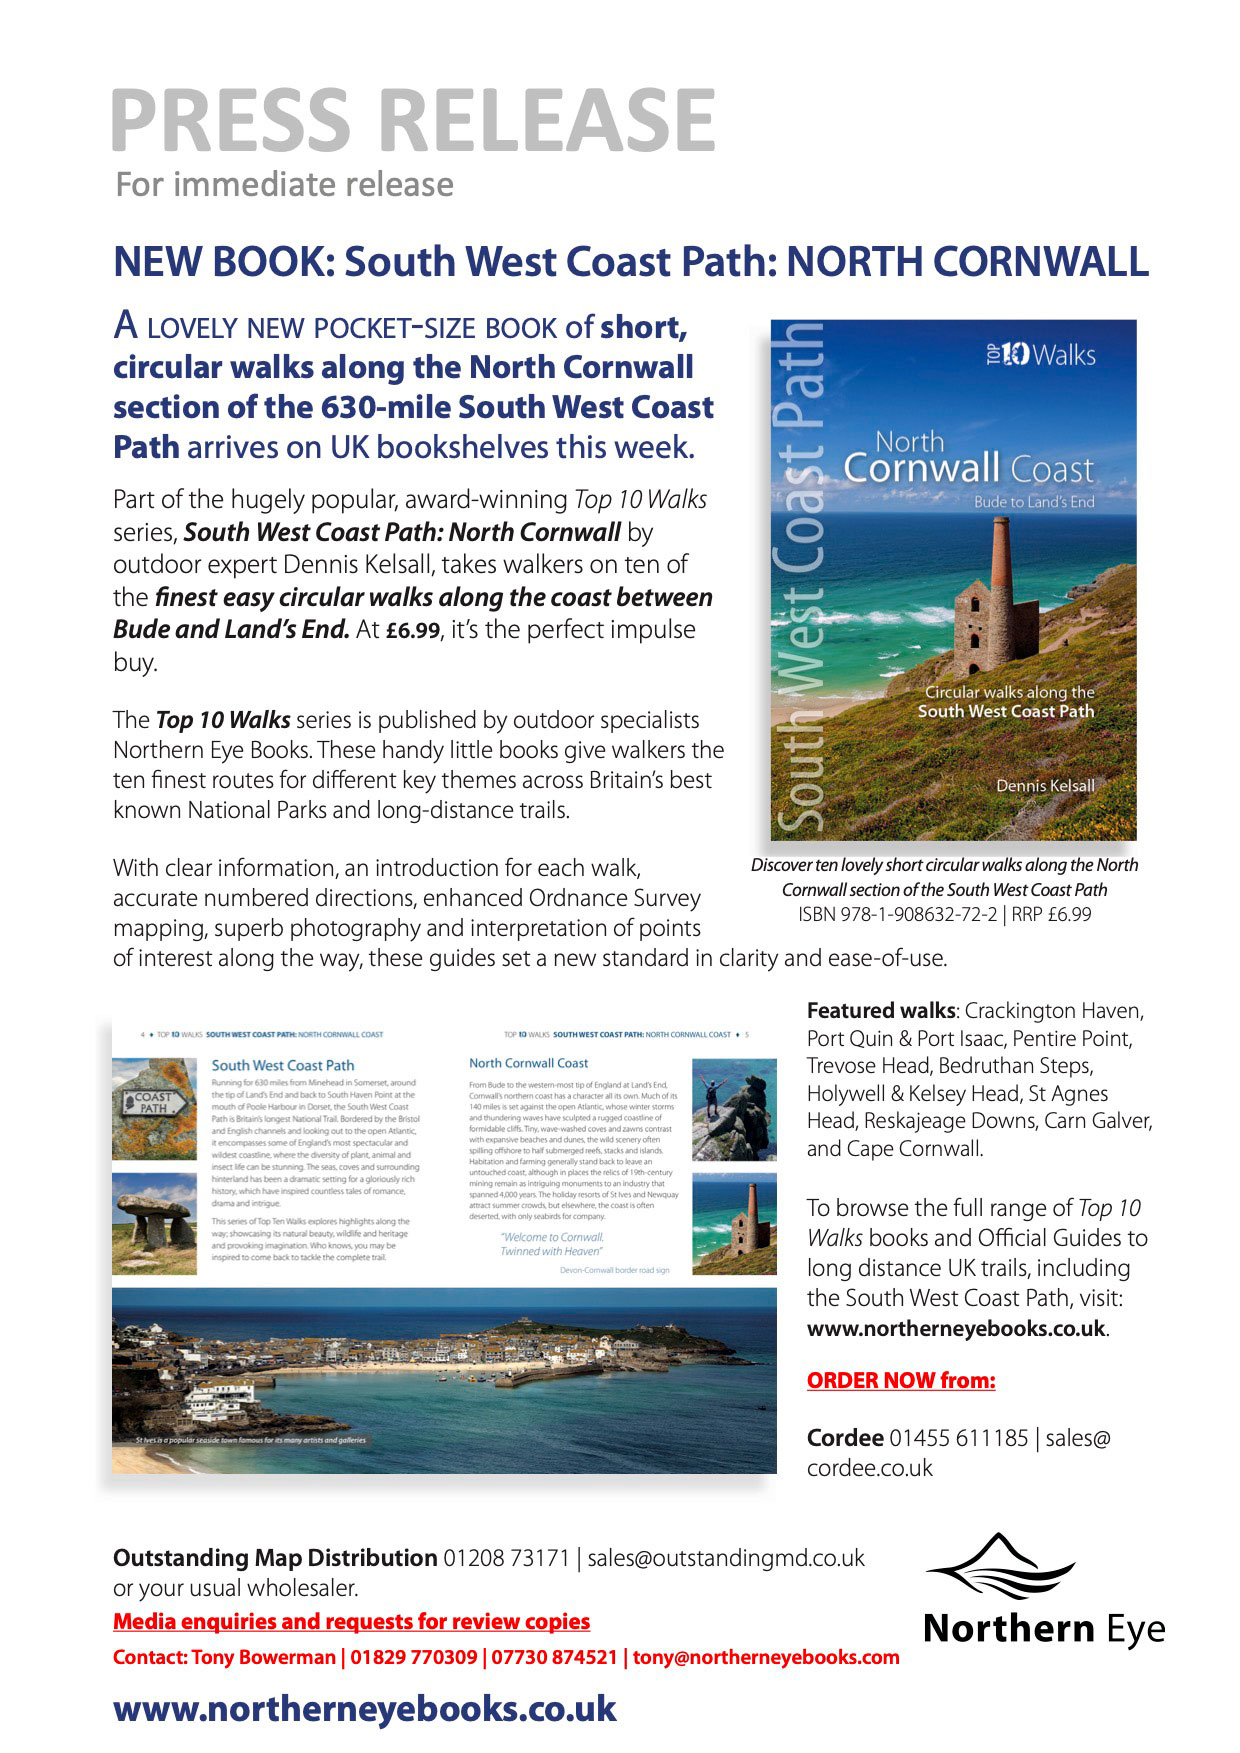 Press Release - New book - south West Coast Path: North Cornwall Coast walks